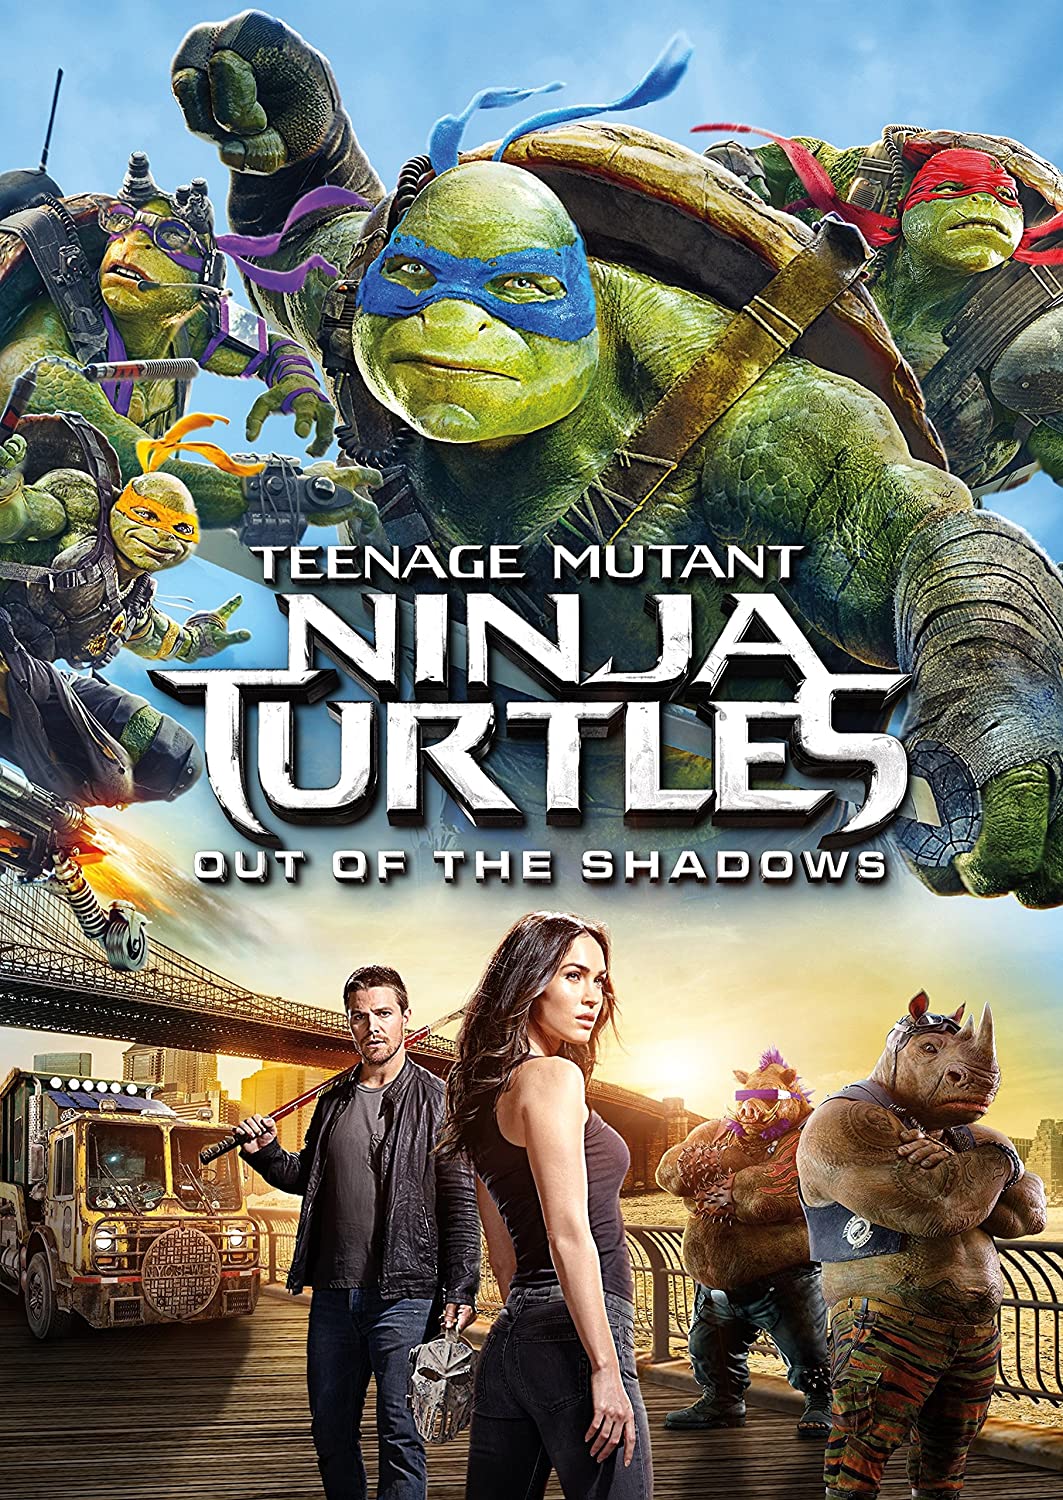 Teenage Mutant Ninja Turtles: Out Of The Shadows - Darkside Records